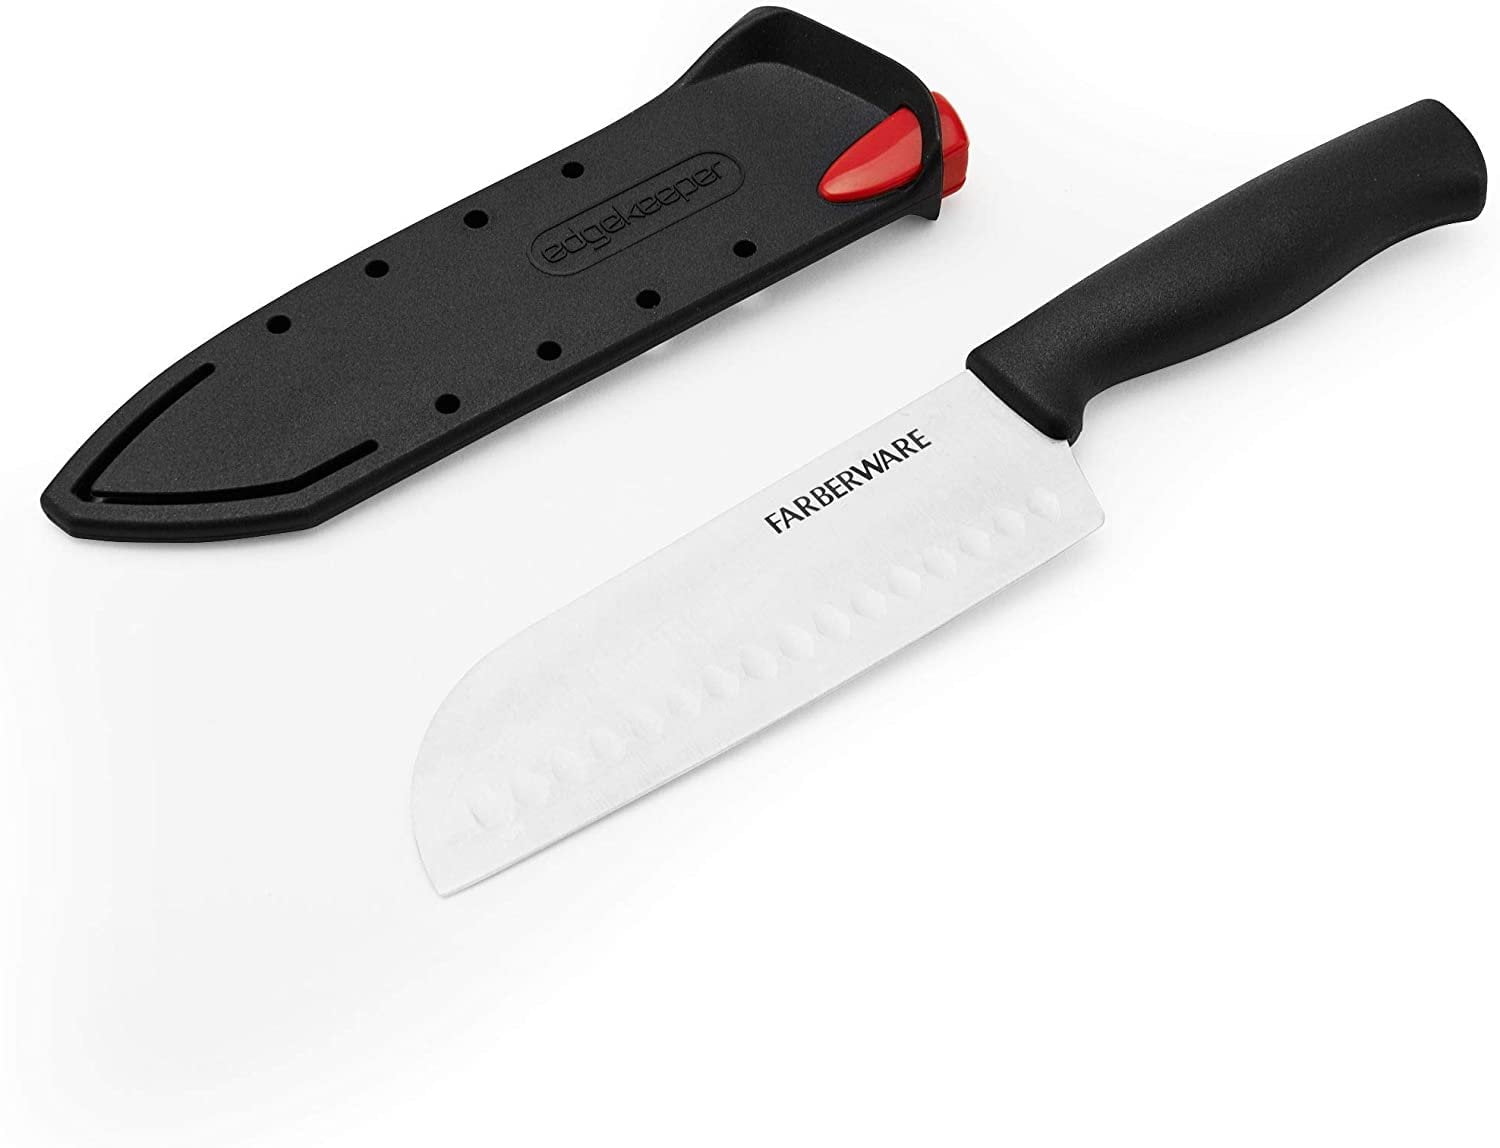  Farberware Edgekeeper 5-Inch Santoku Knife with Self